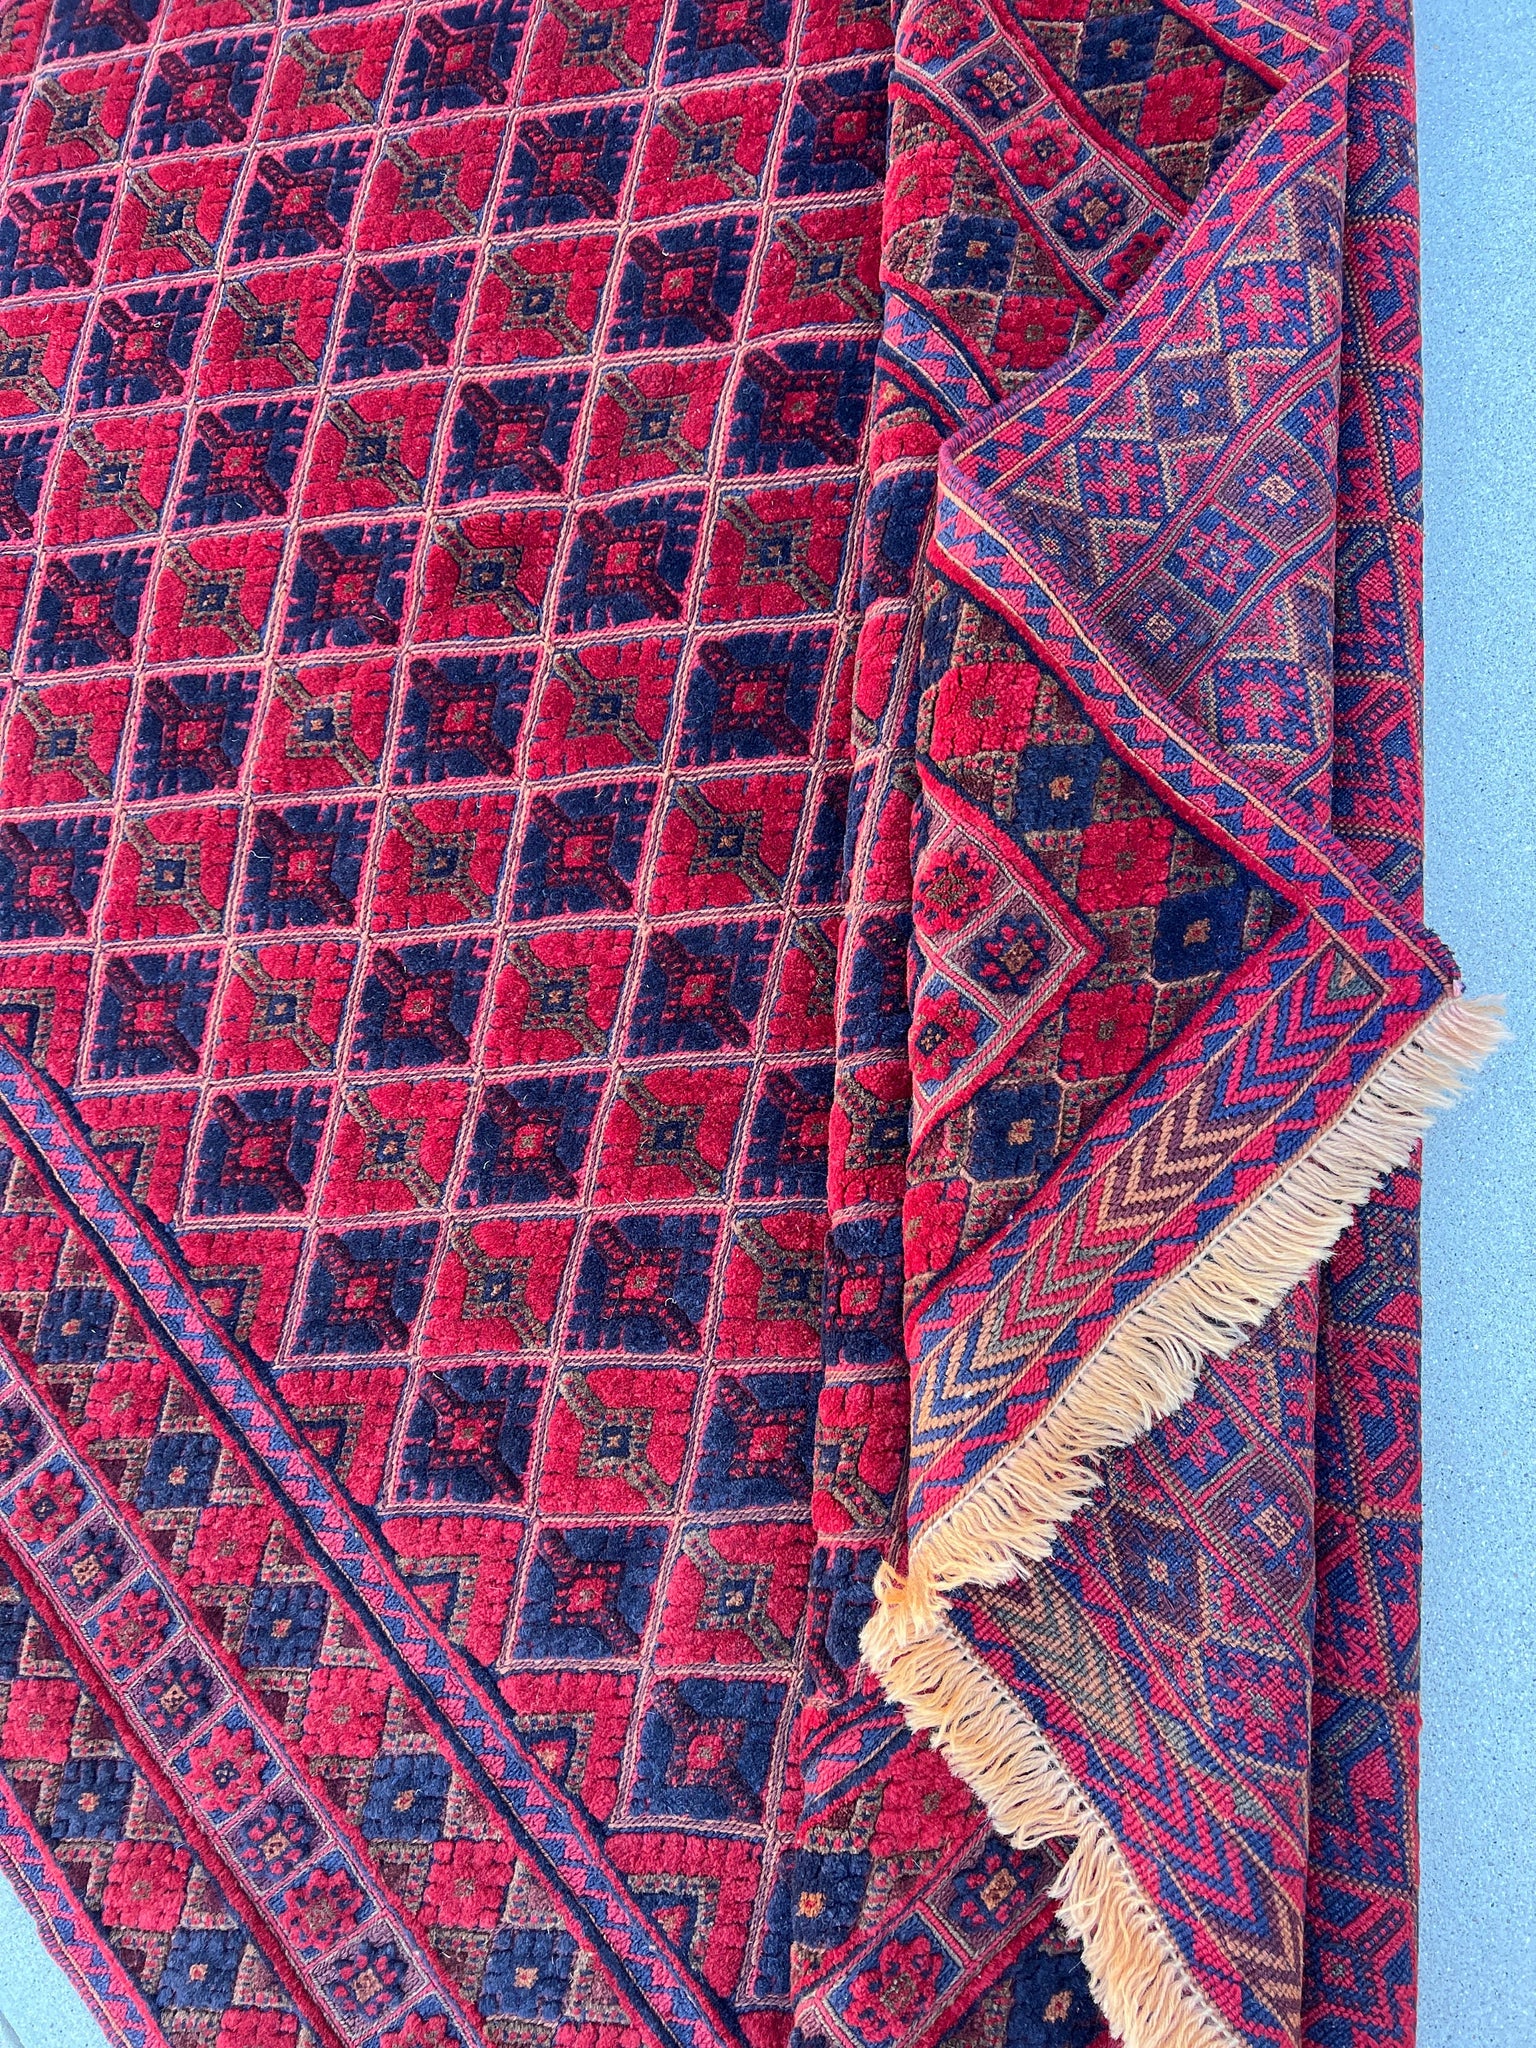 5x7 (150x200) Handmade Afghan Rug | Cherry Auburn Crimson Red Midnight Blue Burnt Orange Taupe Crimson Red Hand Knotted Persian Turkish Wool